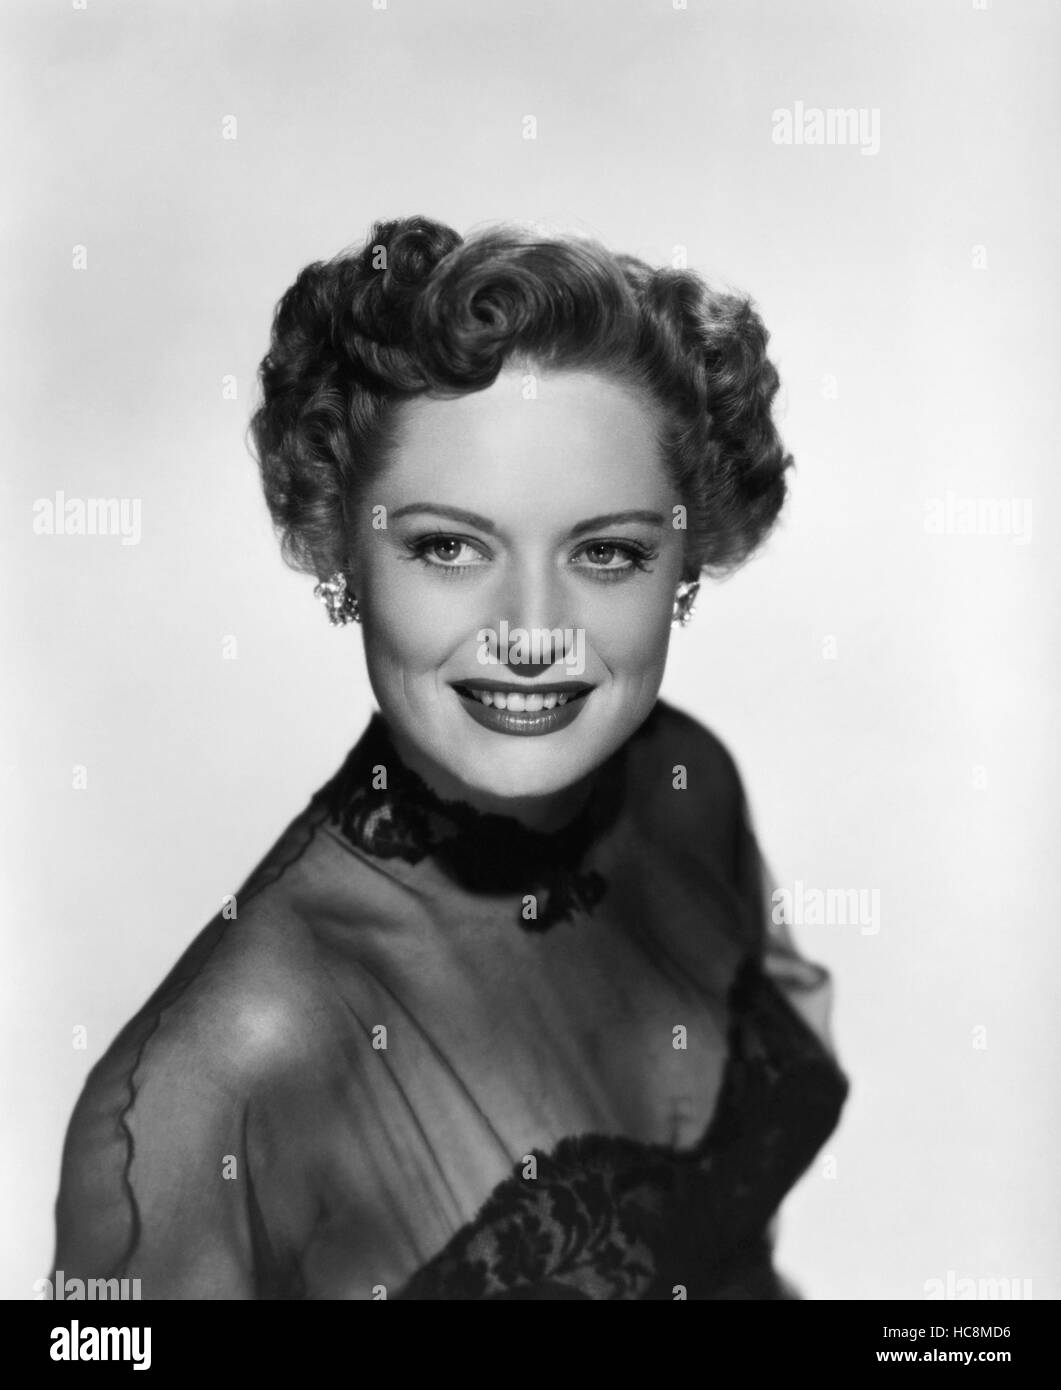 UNDERCOVER GIRL, Alexis Smith, 1950 Stock Photo - Alamy